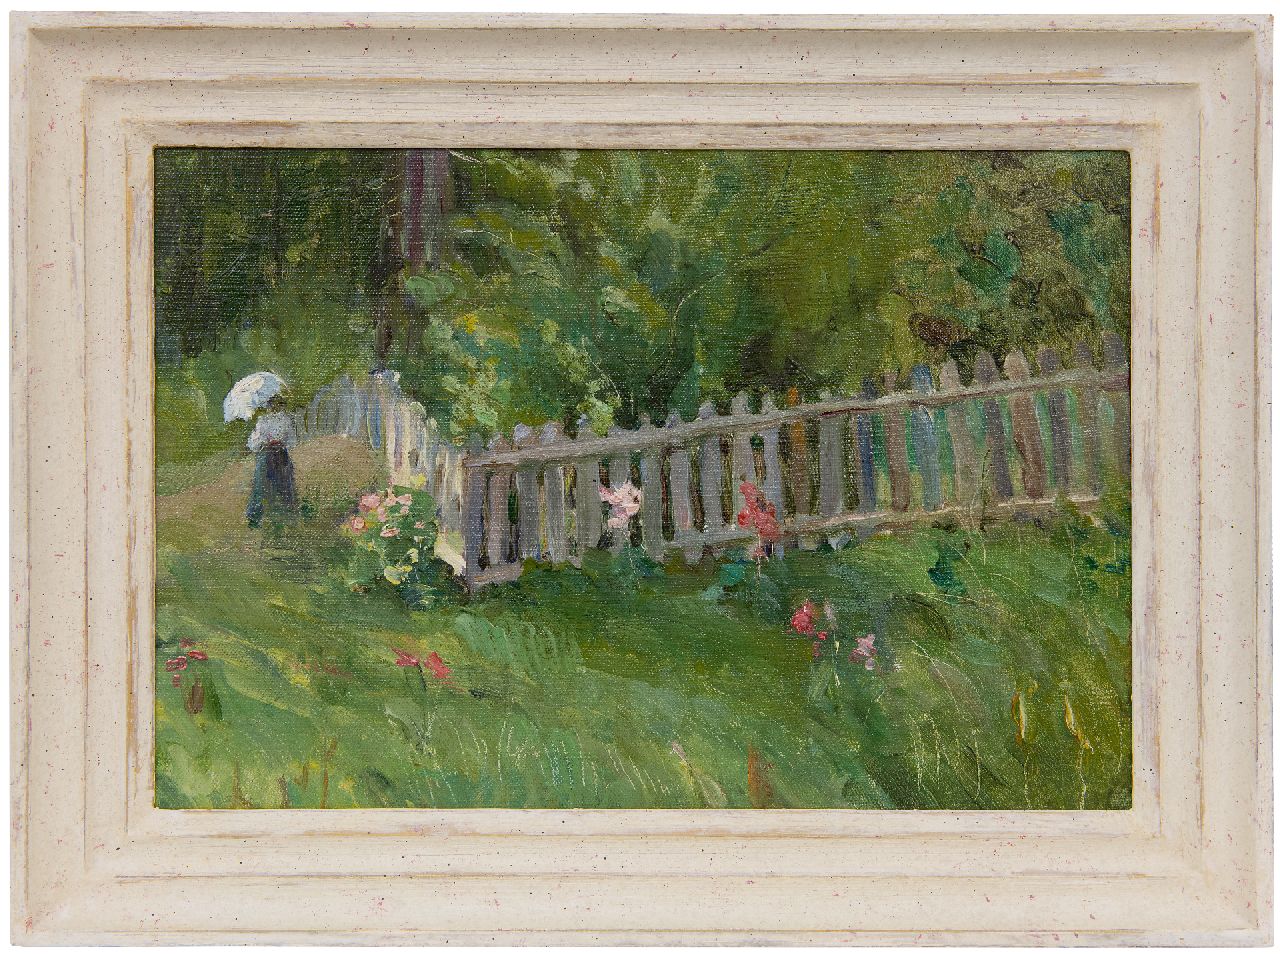 Toussaint F.  | Fernand Toussaint | Schilderijen te koop aangeboden | Wandeling in de tuin, olieverf op doek op board 29,3 x 42,3 cm